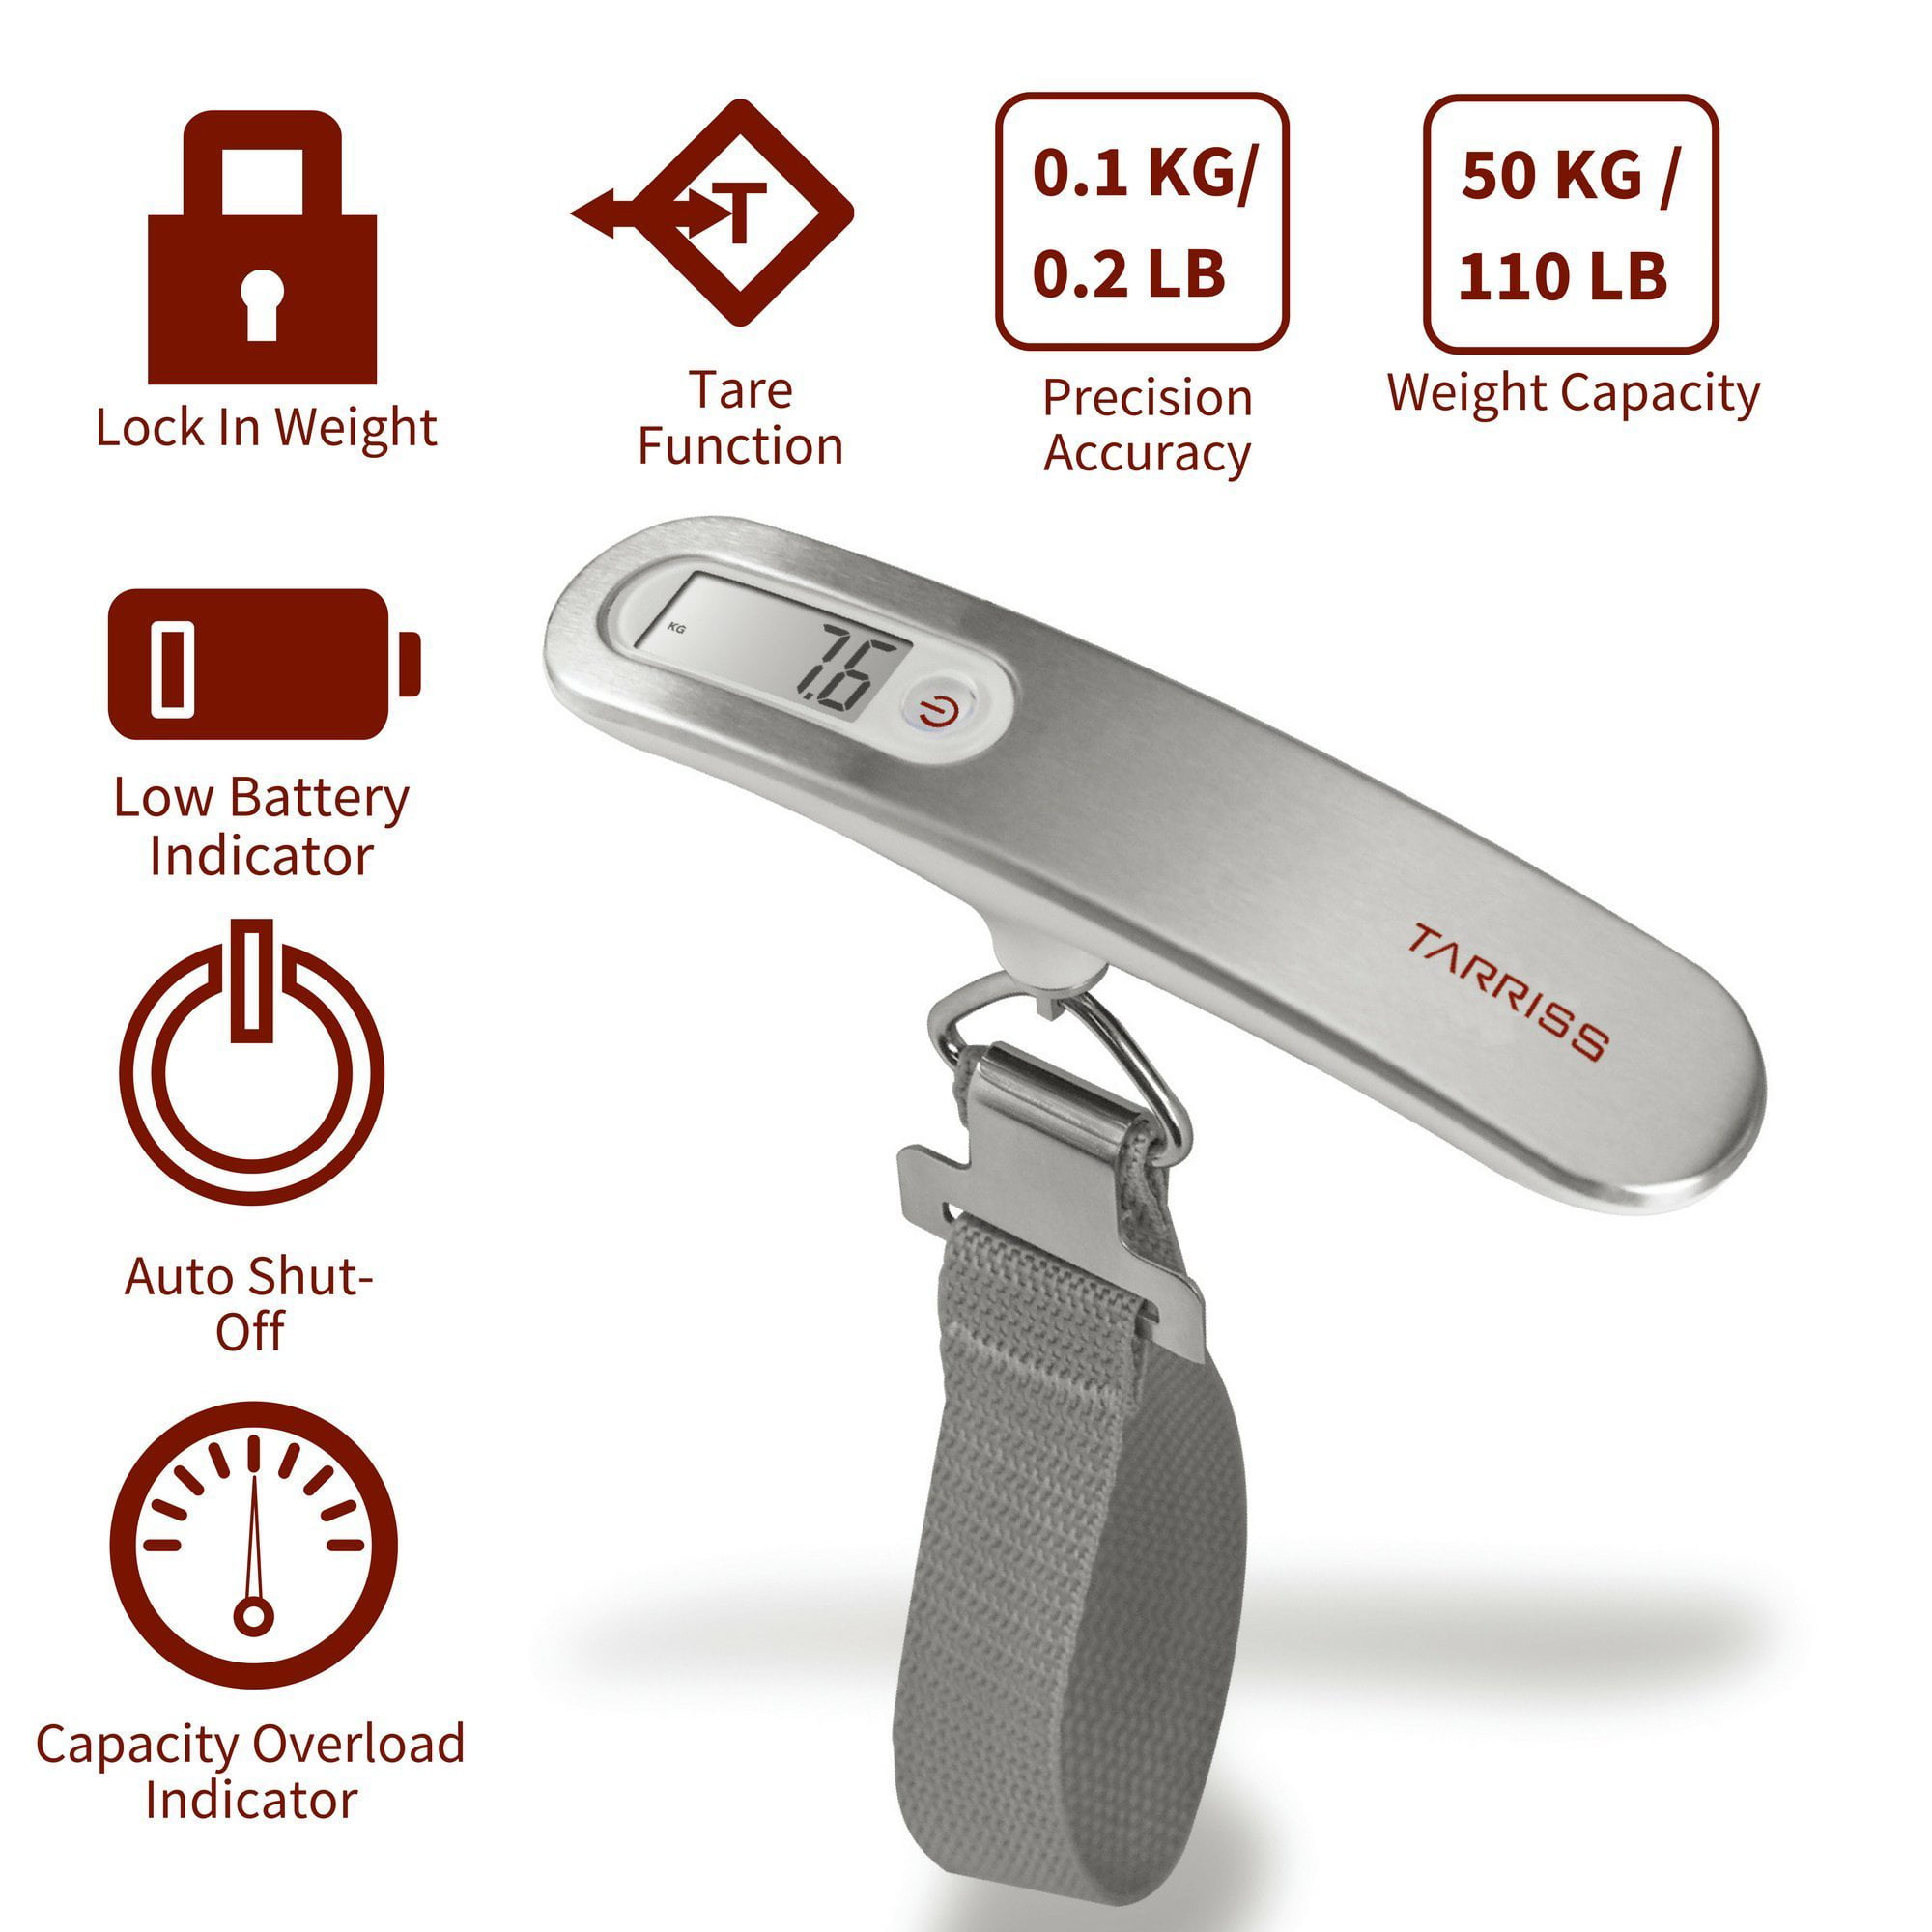 White Tarriss Jetsetter Digital Luggage Scale w/ 110 lb Capacity